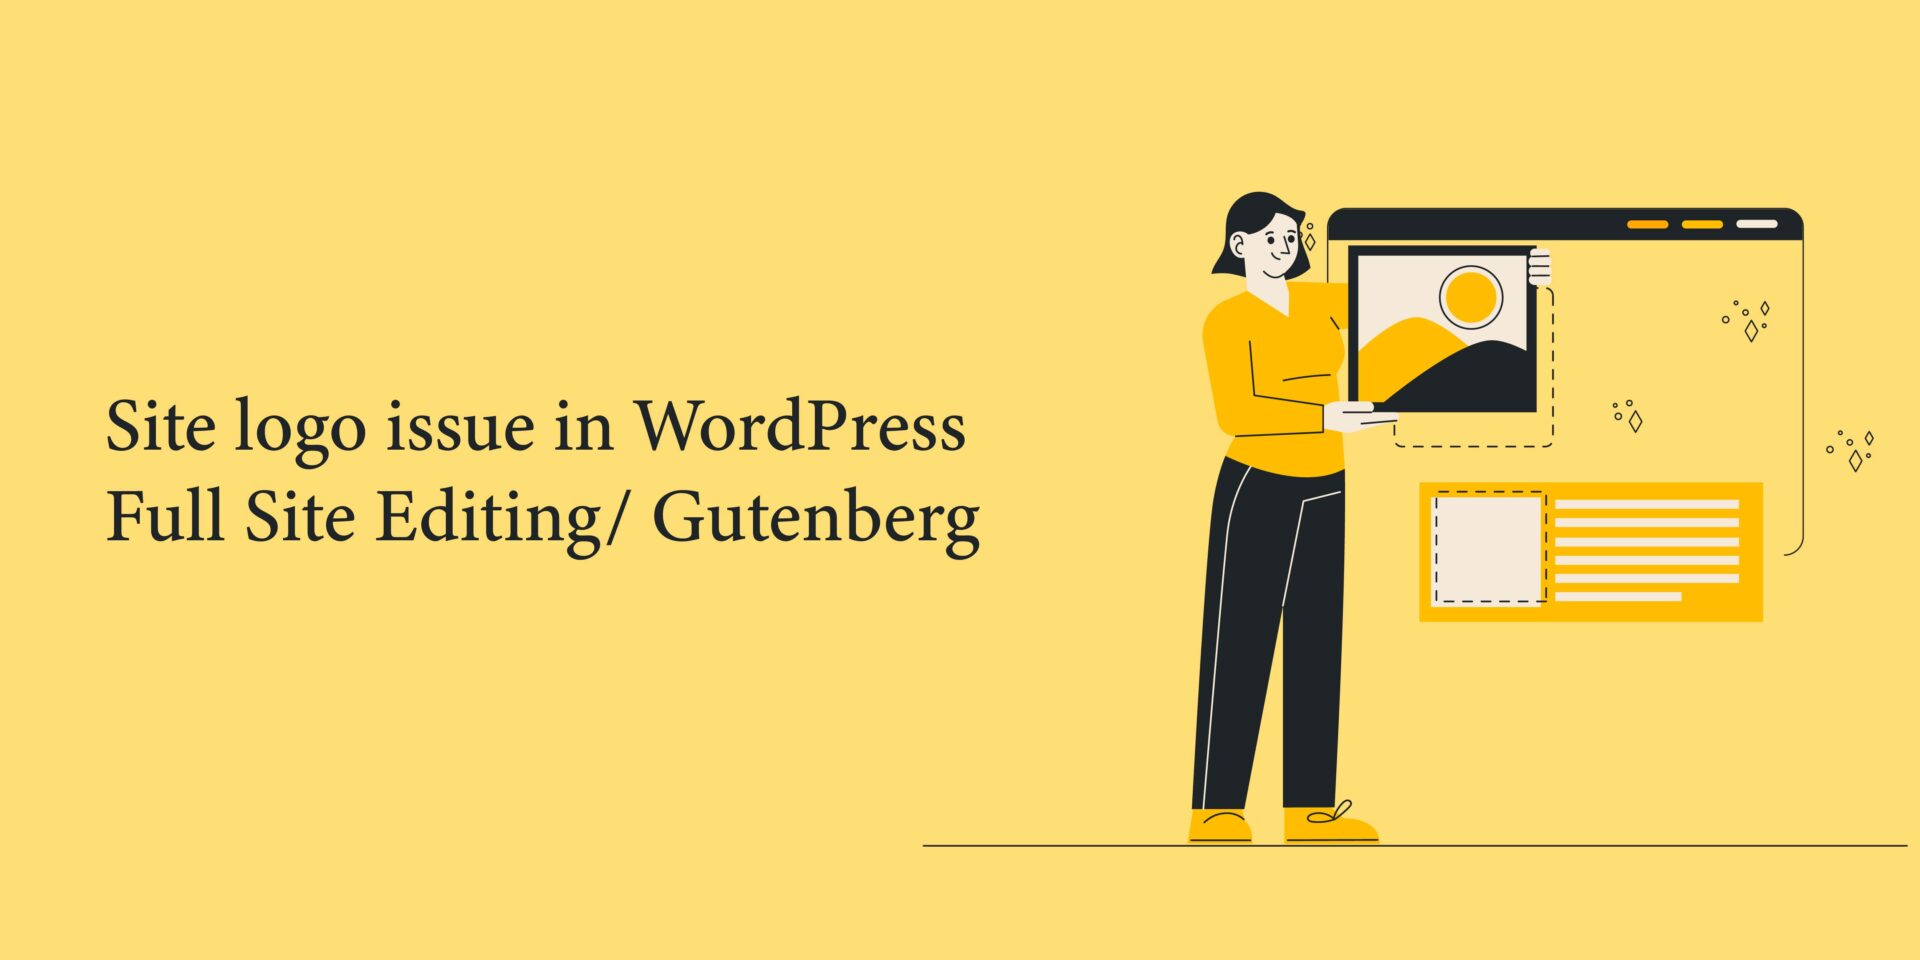 Site logo issue in WordPress Full Site Editing/ Gutenberg